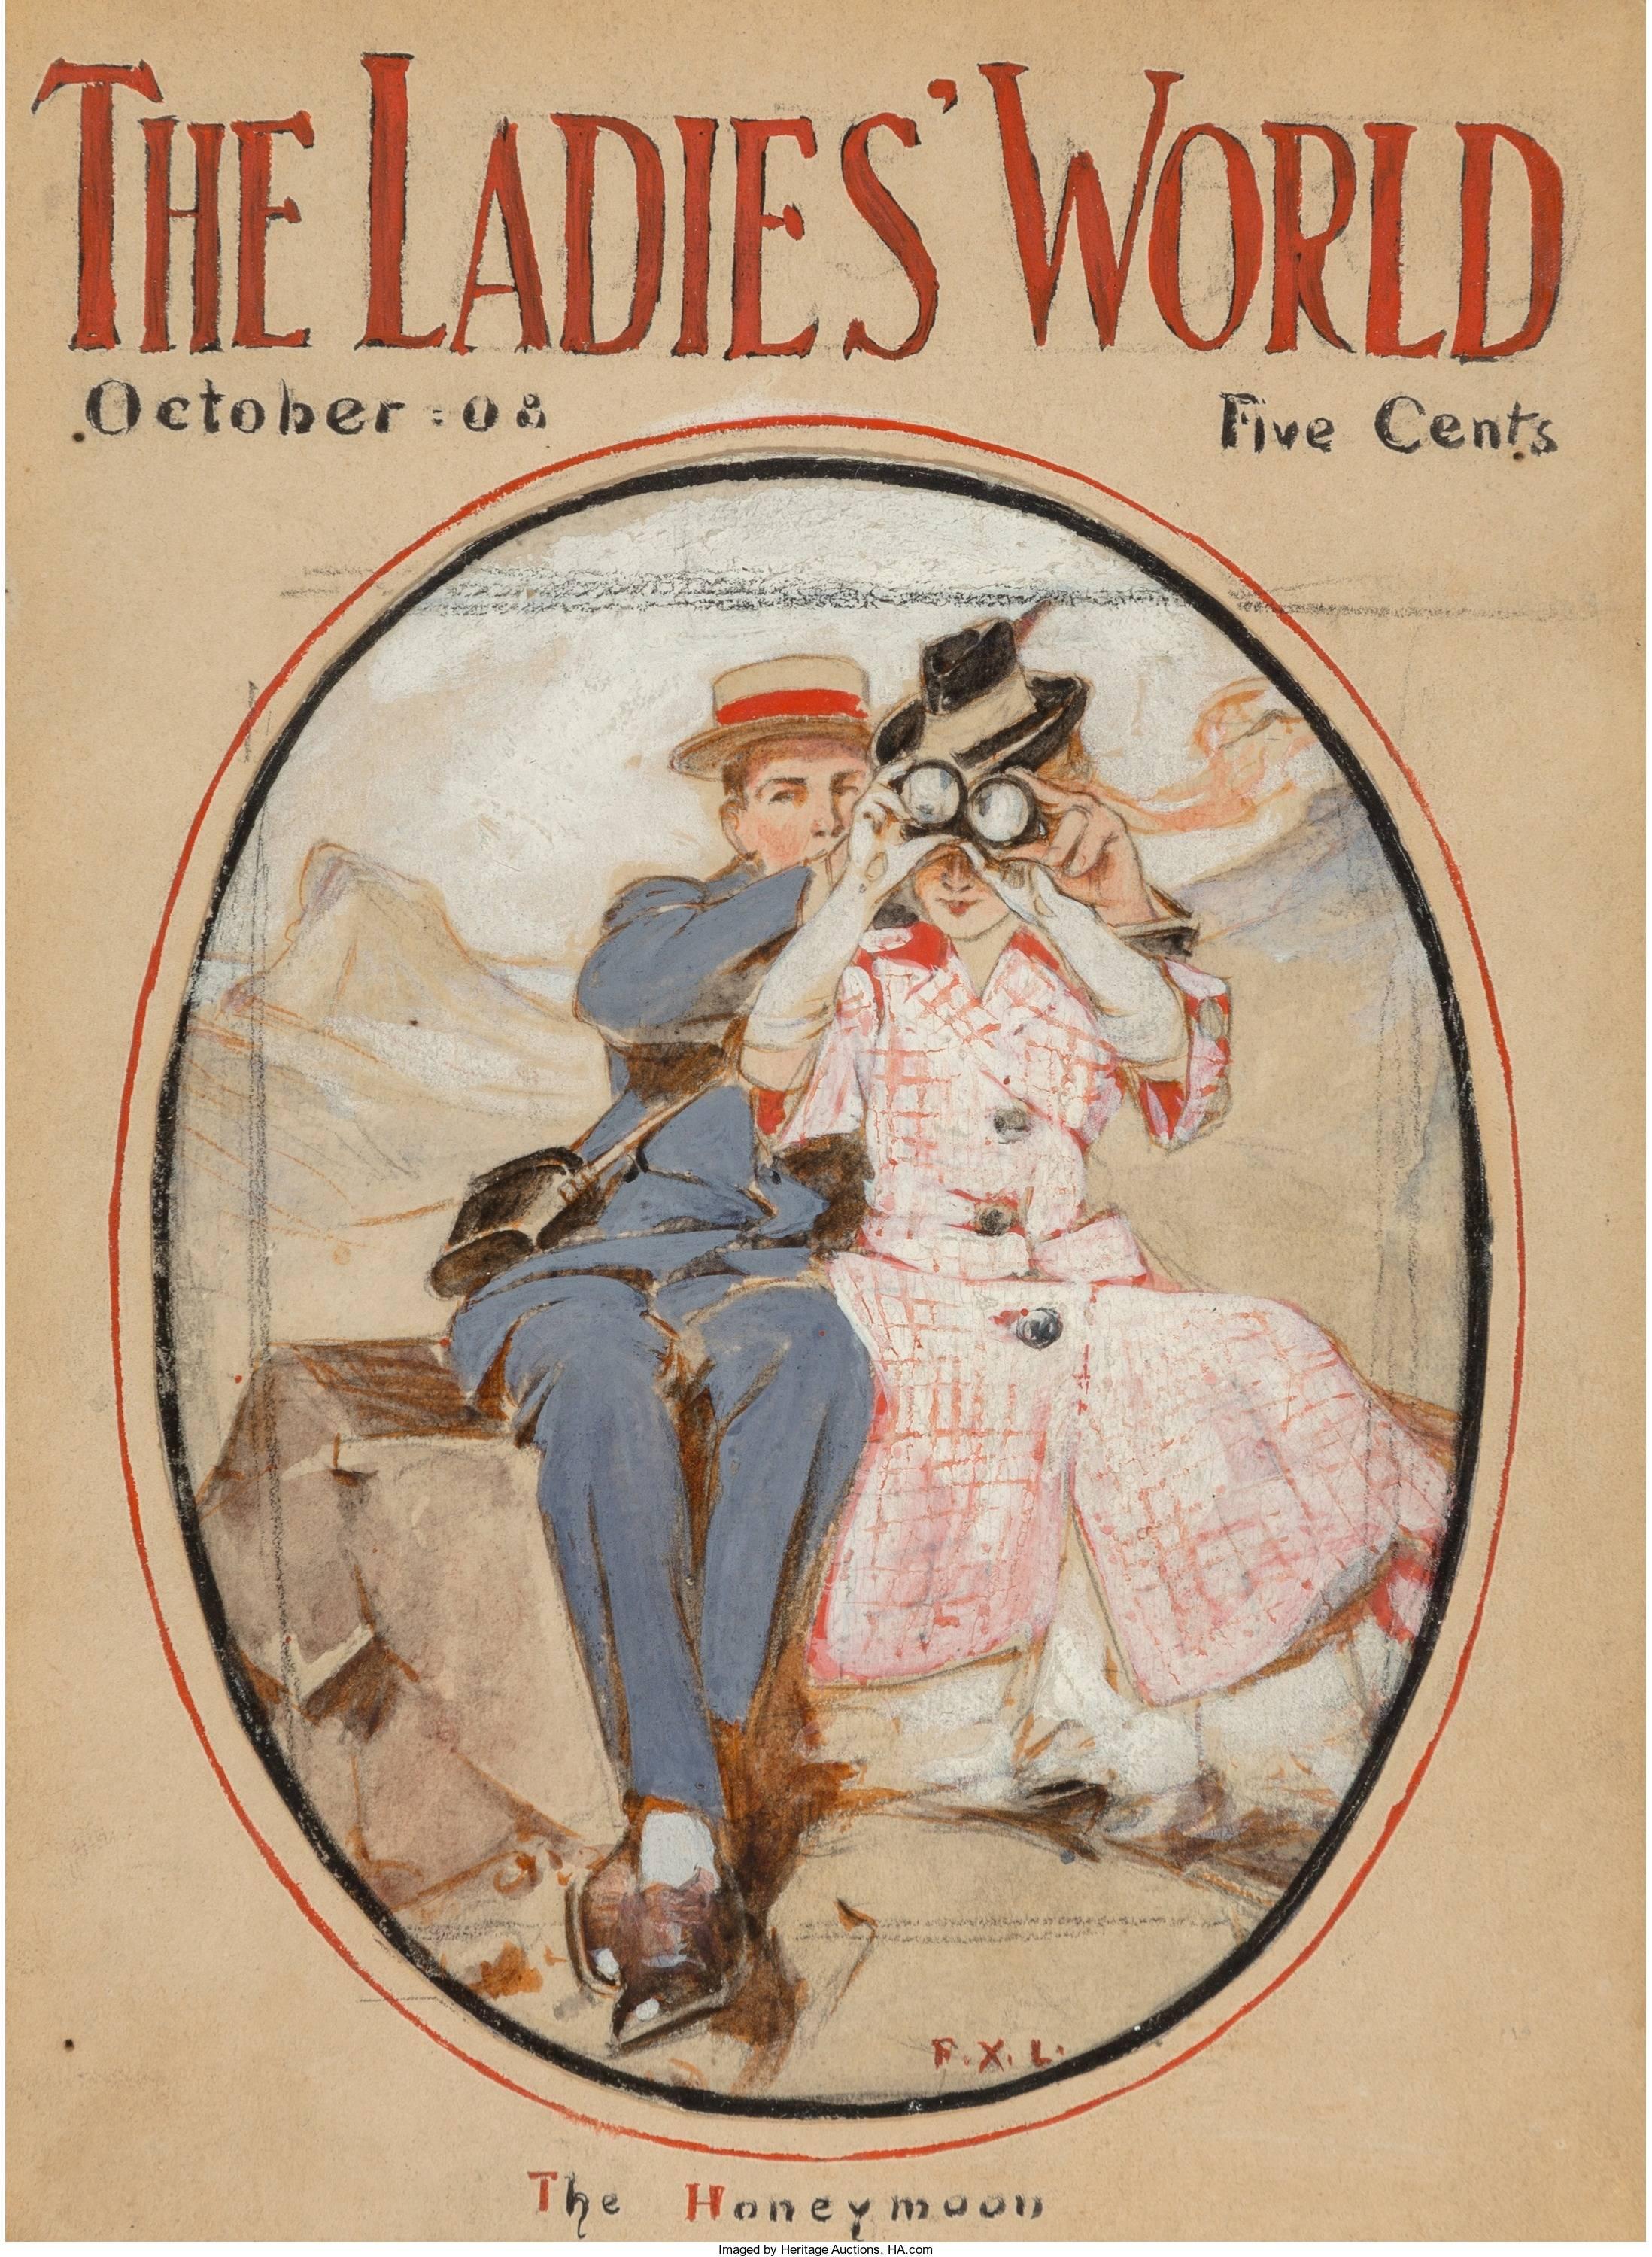 The Honeymoon, The Ladies World Magazine Cover, October 1908